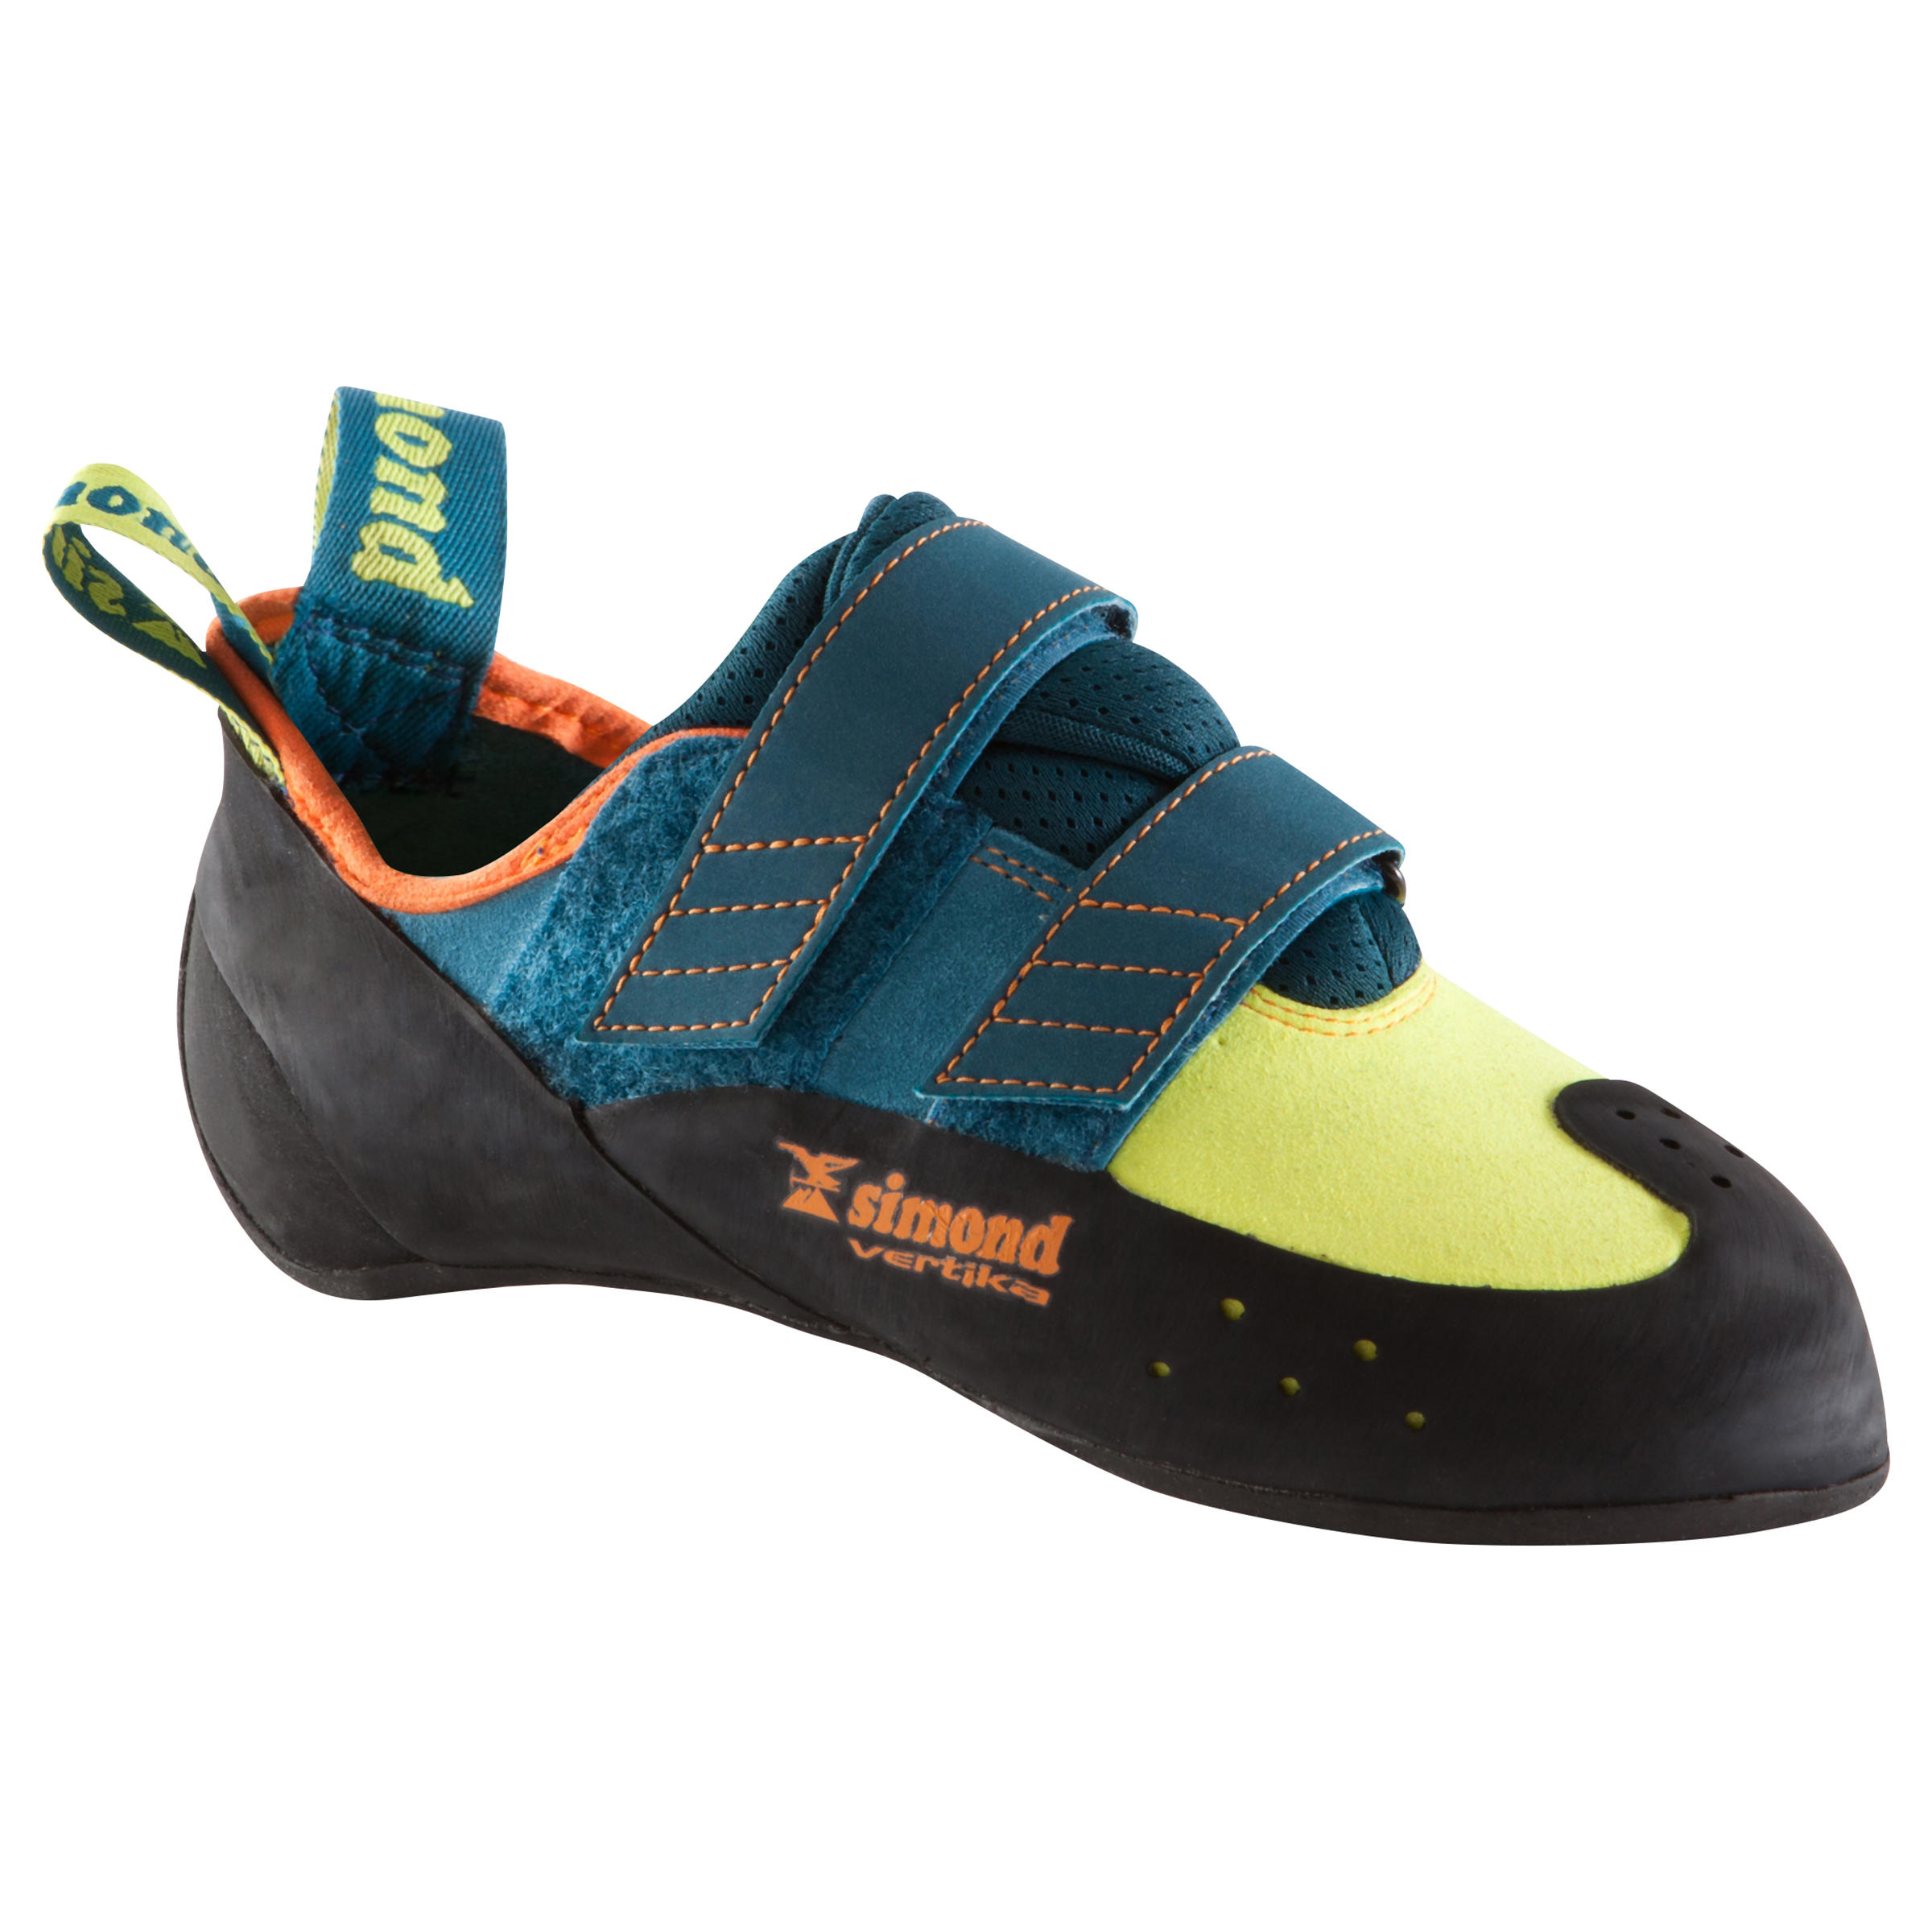 decathlon bouldering shoes